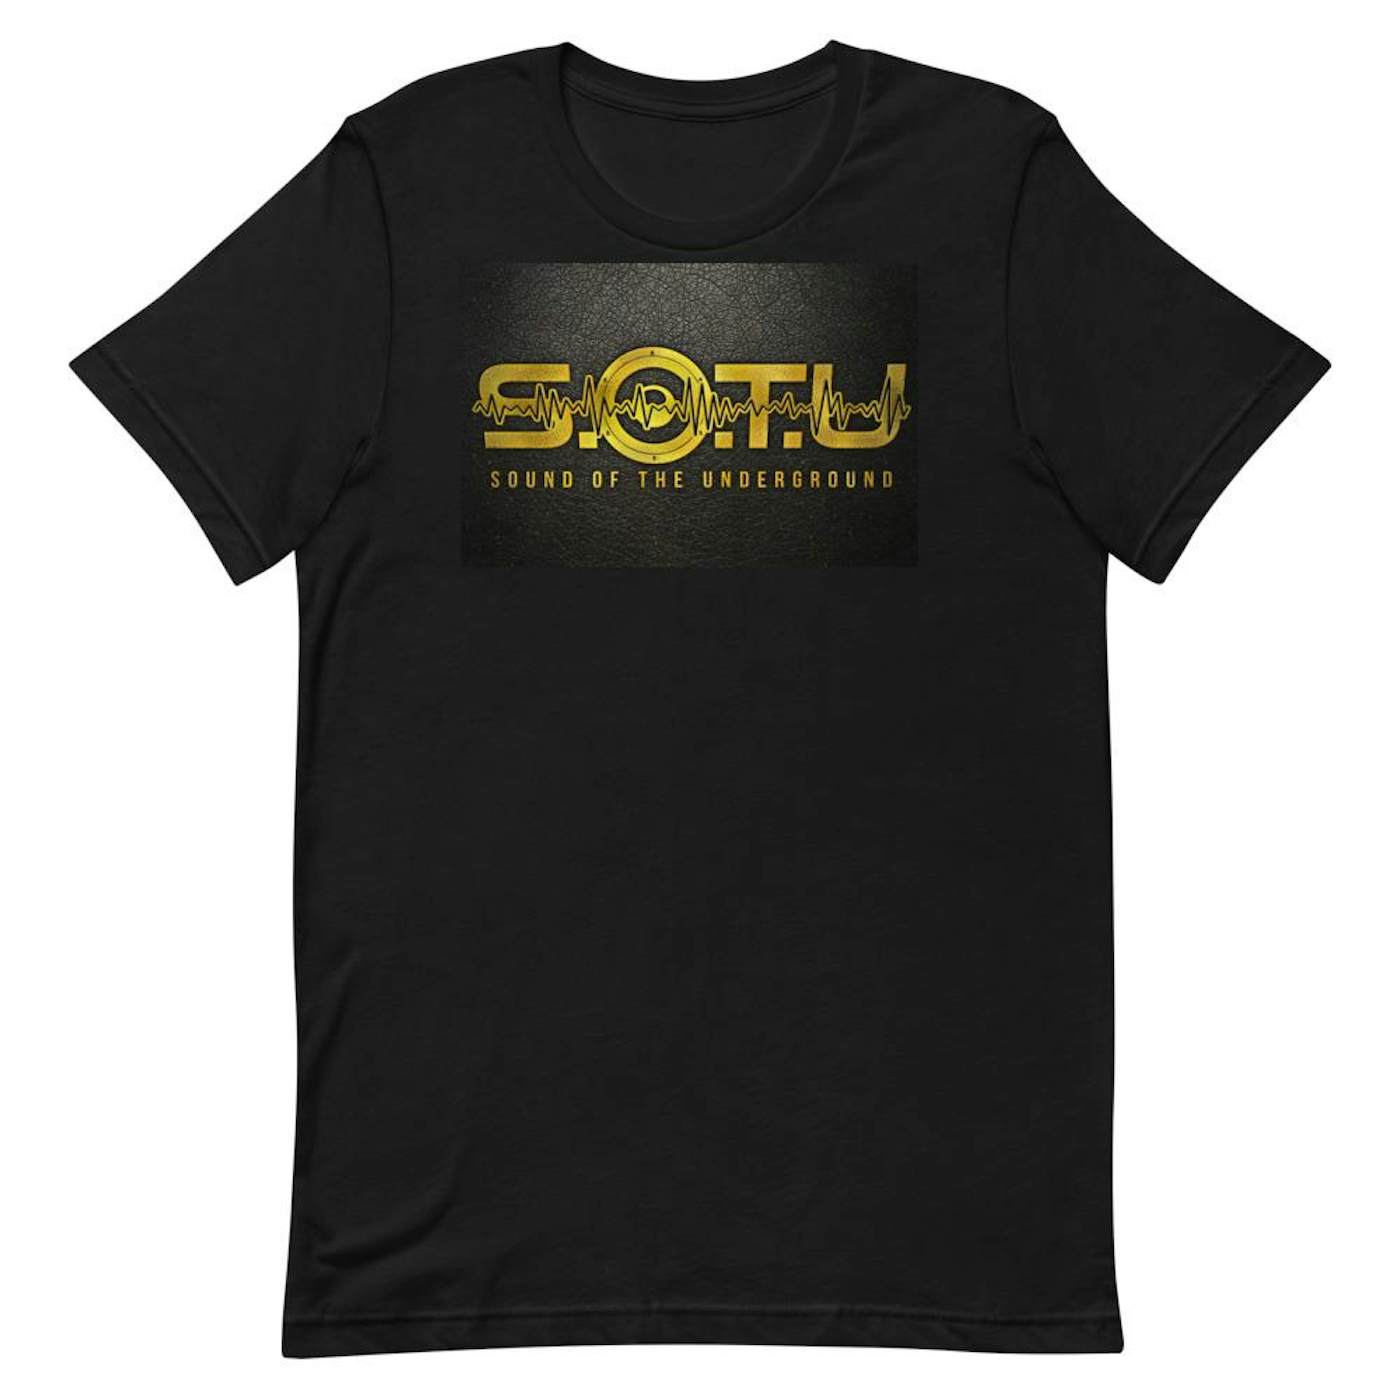 SOTU Bumpin' In Style T (Gold)